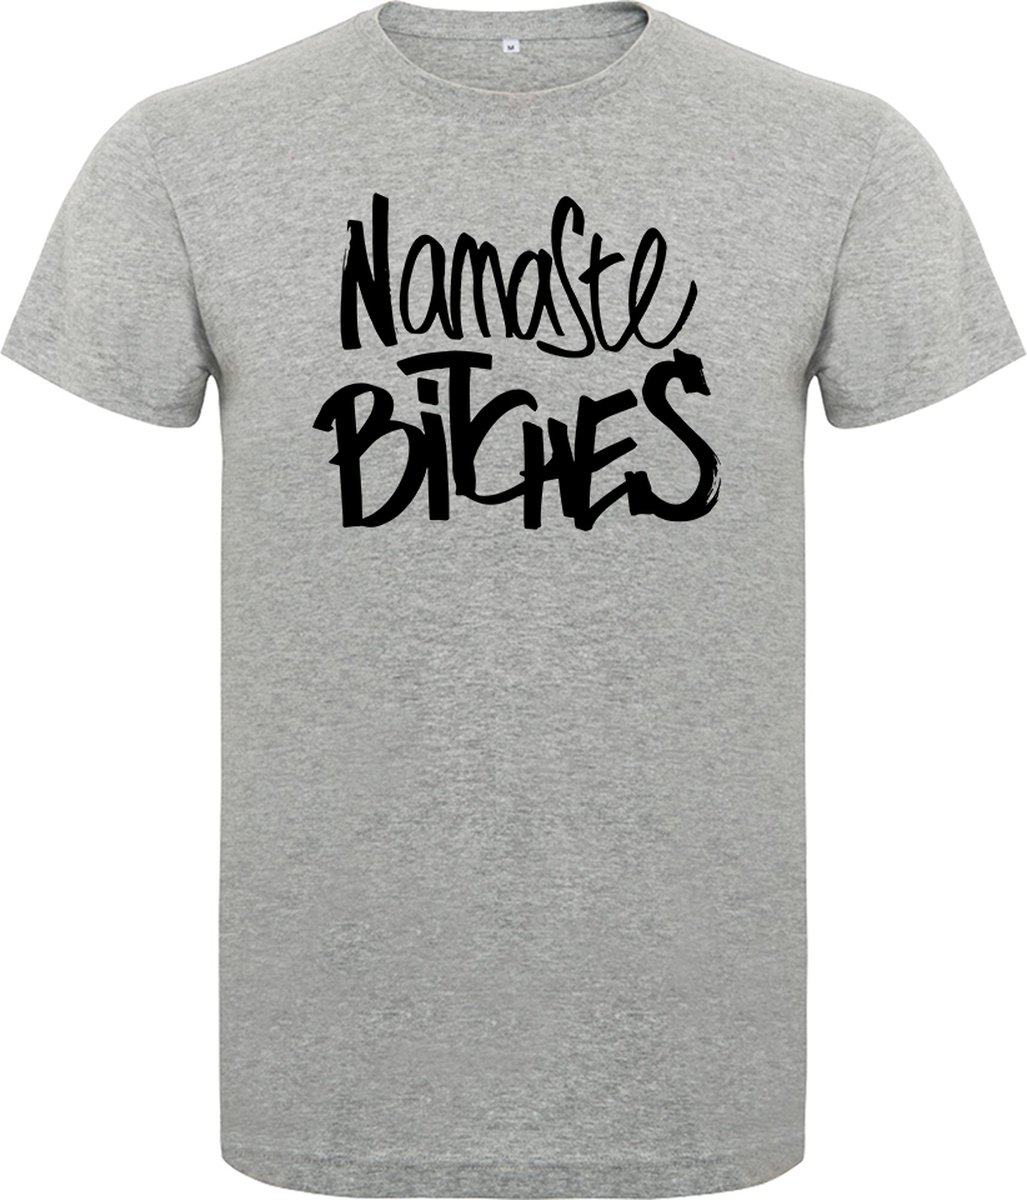 T-Shirt - Casual T-Shirt - Fun T-Shirt - Fun Tekst - Lifestyle T-Shirt - Grappig - Mood - Sport - Yoga - Relax - Vibe - Namaste Bitches - Maat M